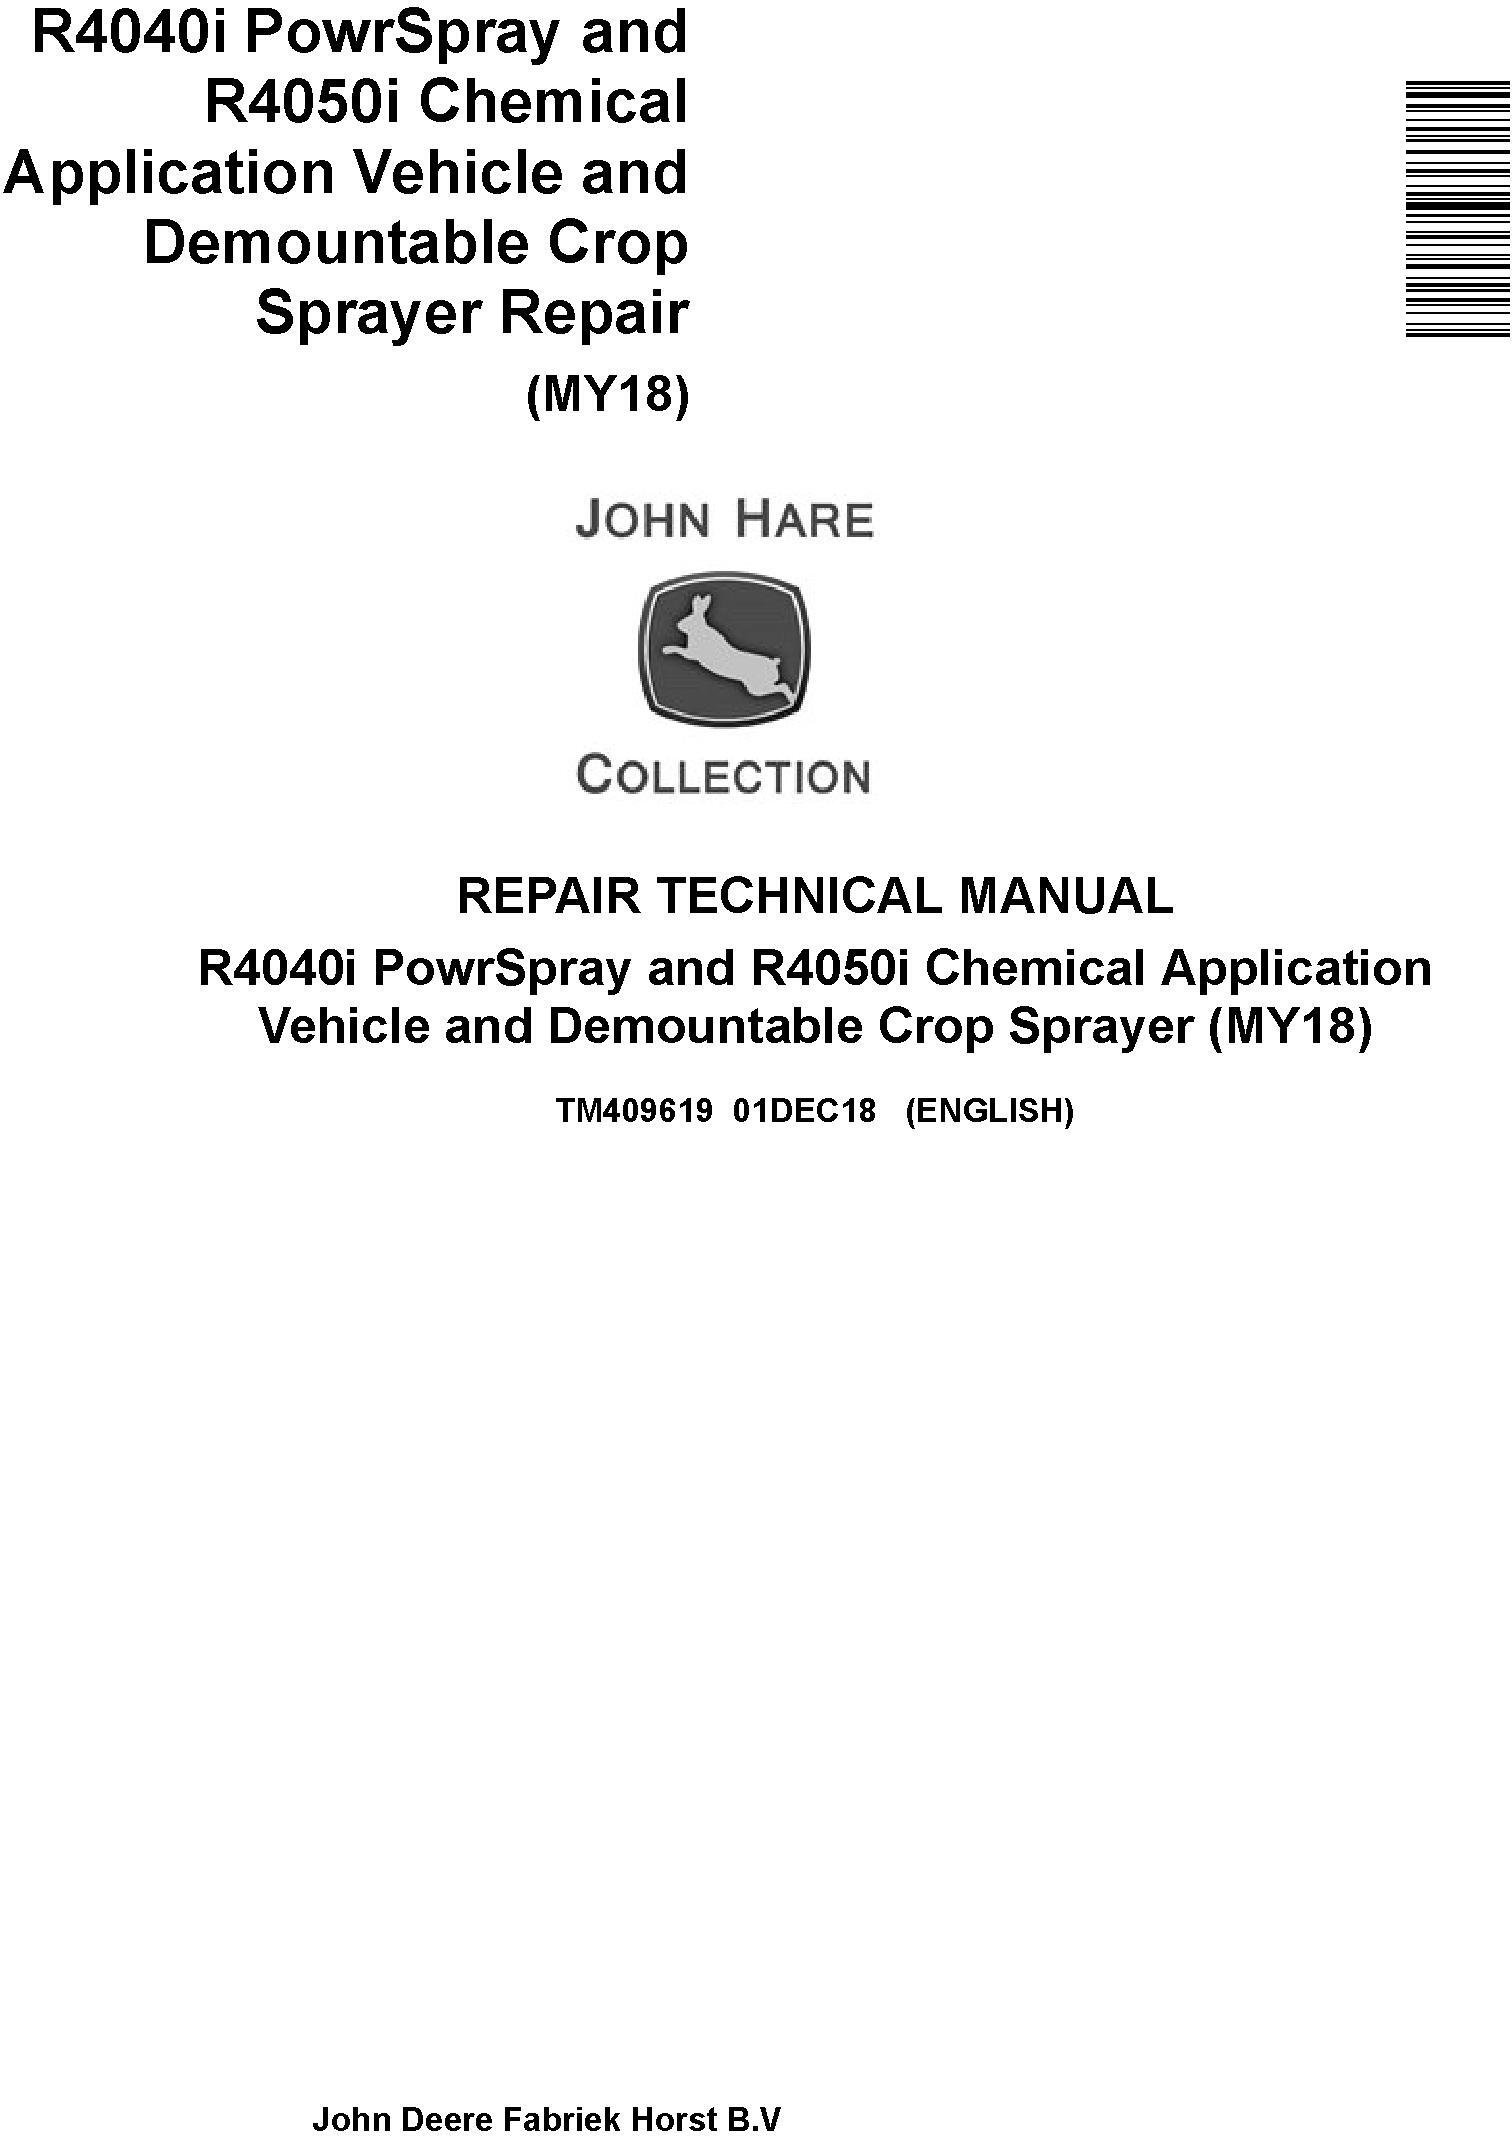 John Deere R4040i R4050i Sprayer Repair Technical Manual TM409619